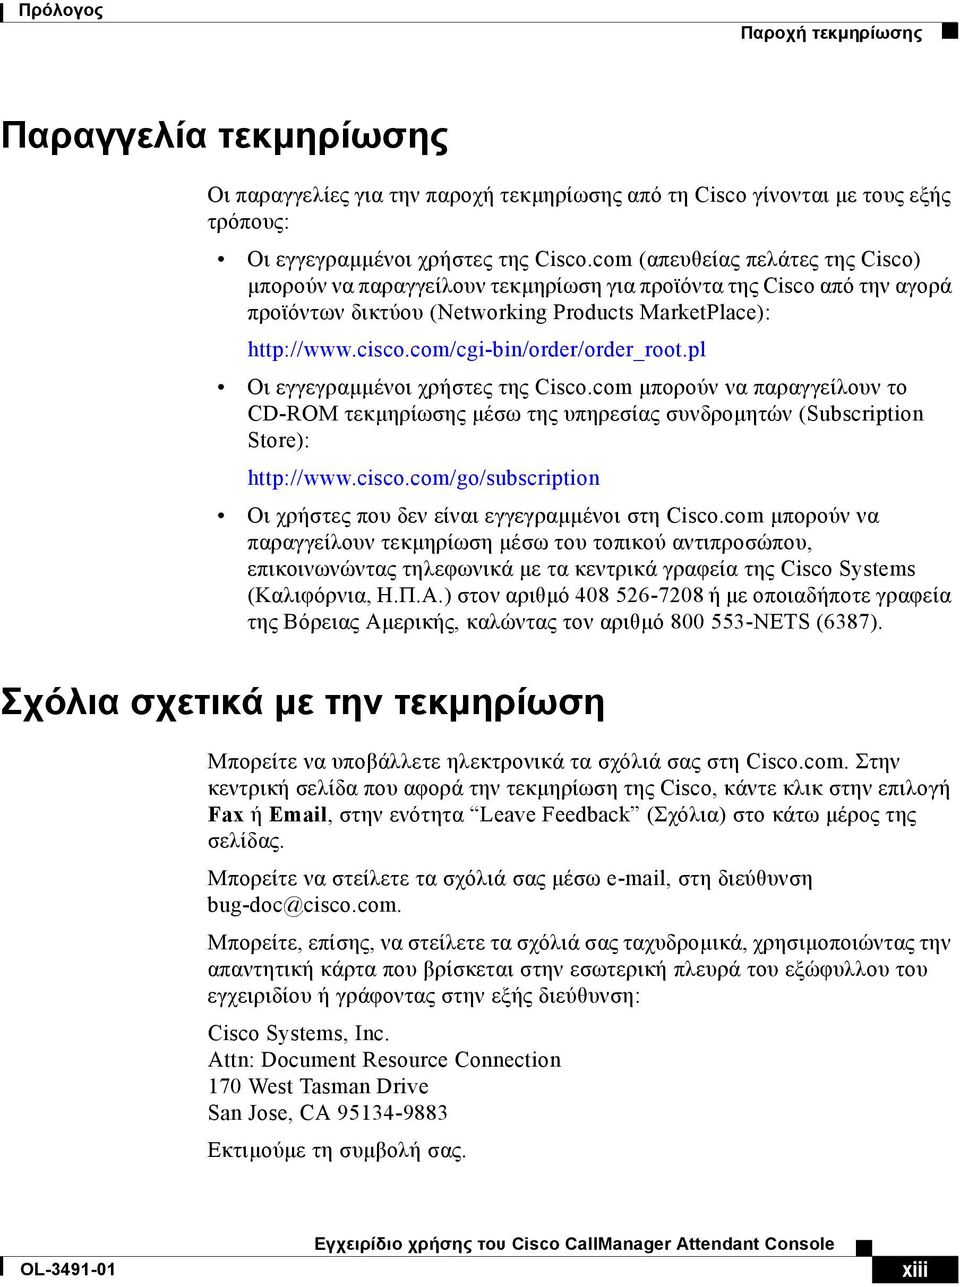 com/cgi-bin/order/order_root.pl Οι εγγεγραµµένοι χρήστες της Cisco.com µπορούν να παραγγείλουν το CD-ROM τεκµηρίωσης µέσω της υπηρεσίας συνδροµητών (Subscription Store): http://www.cisco.